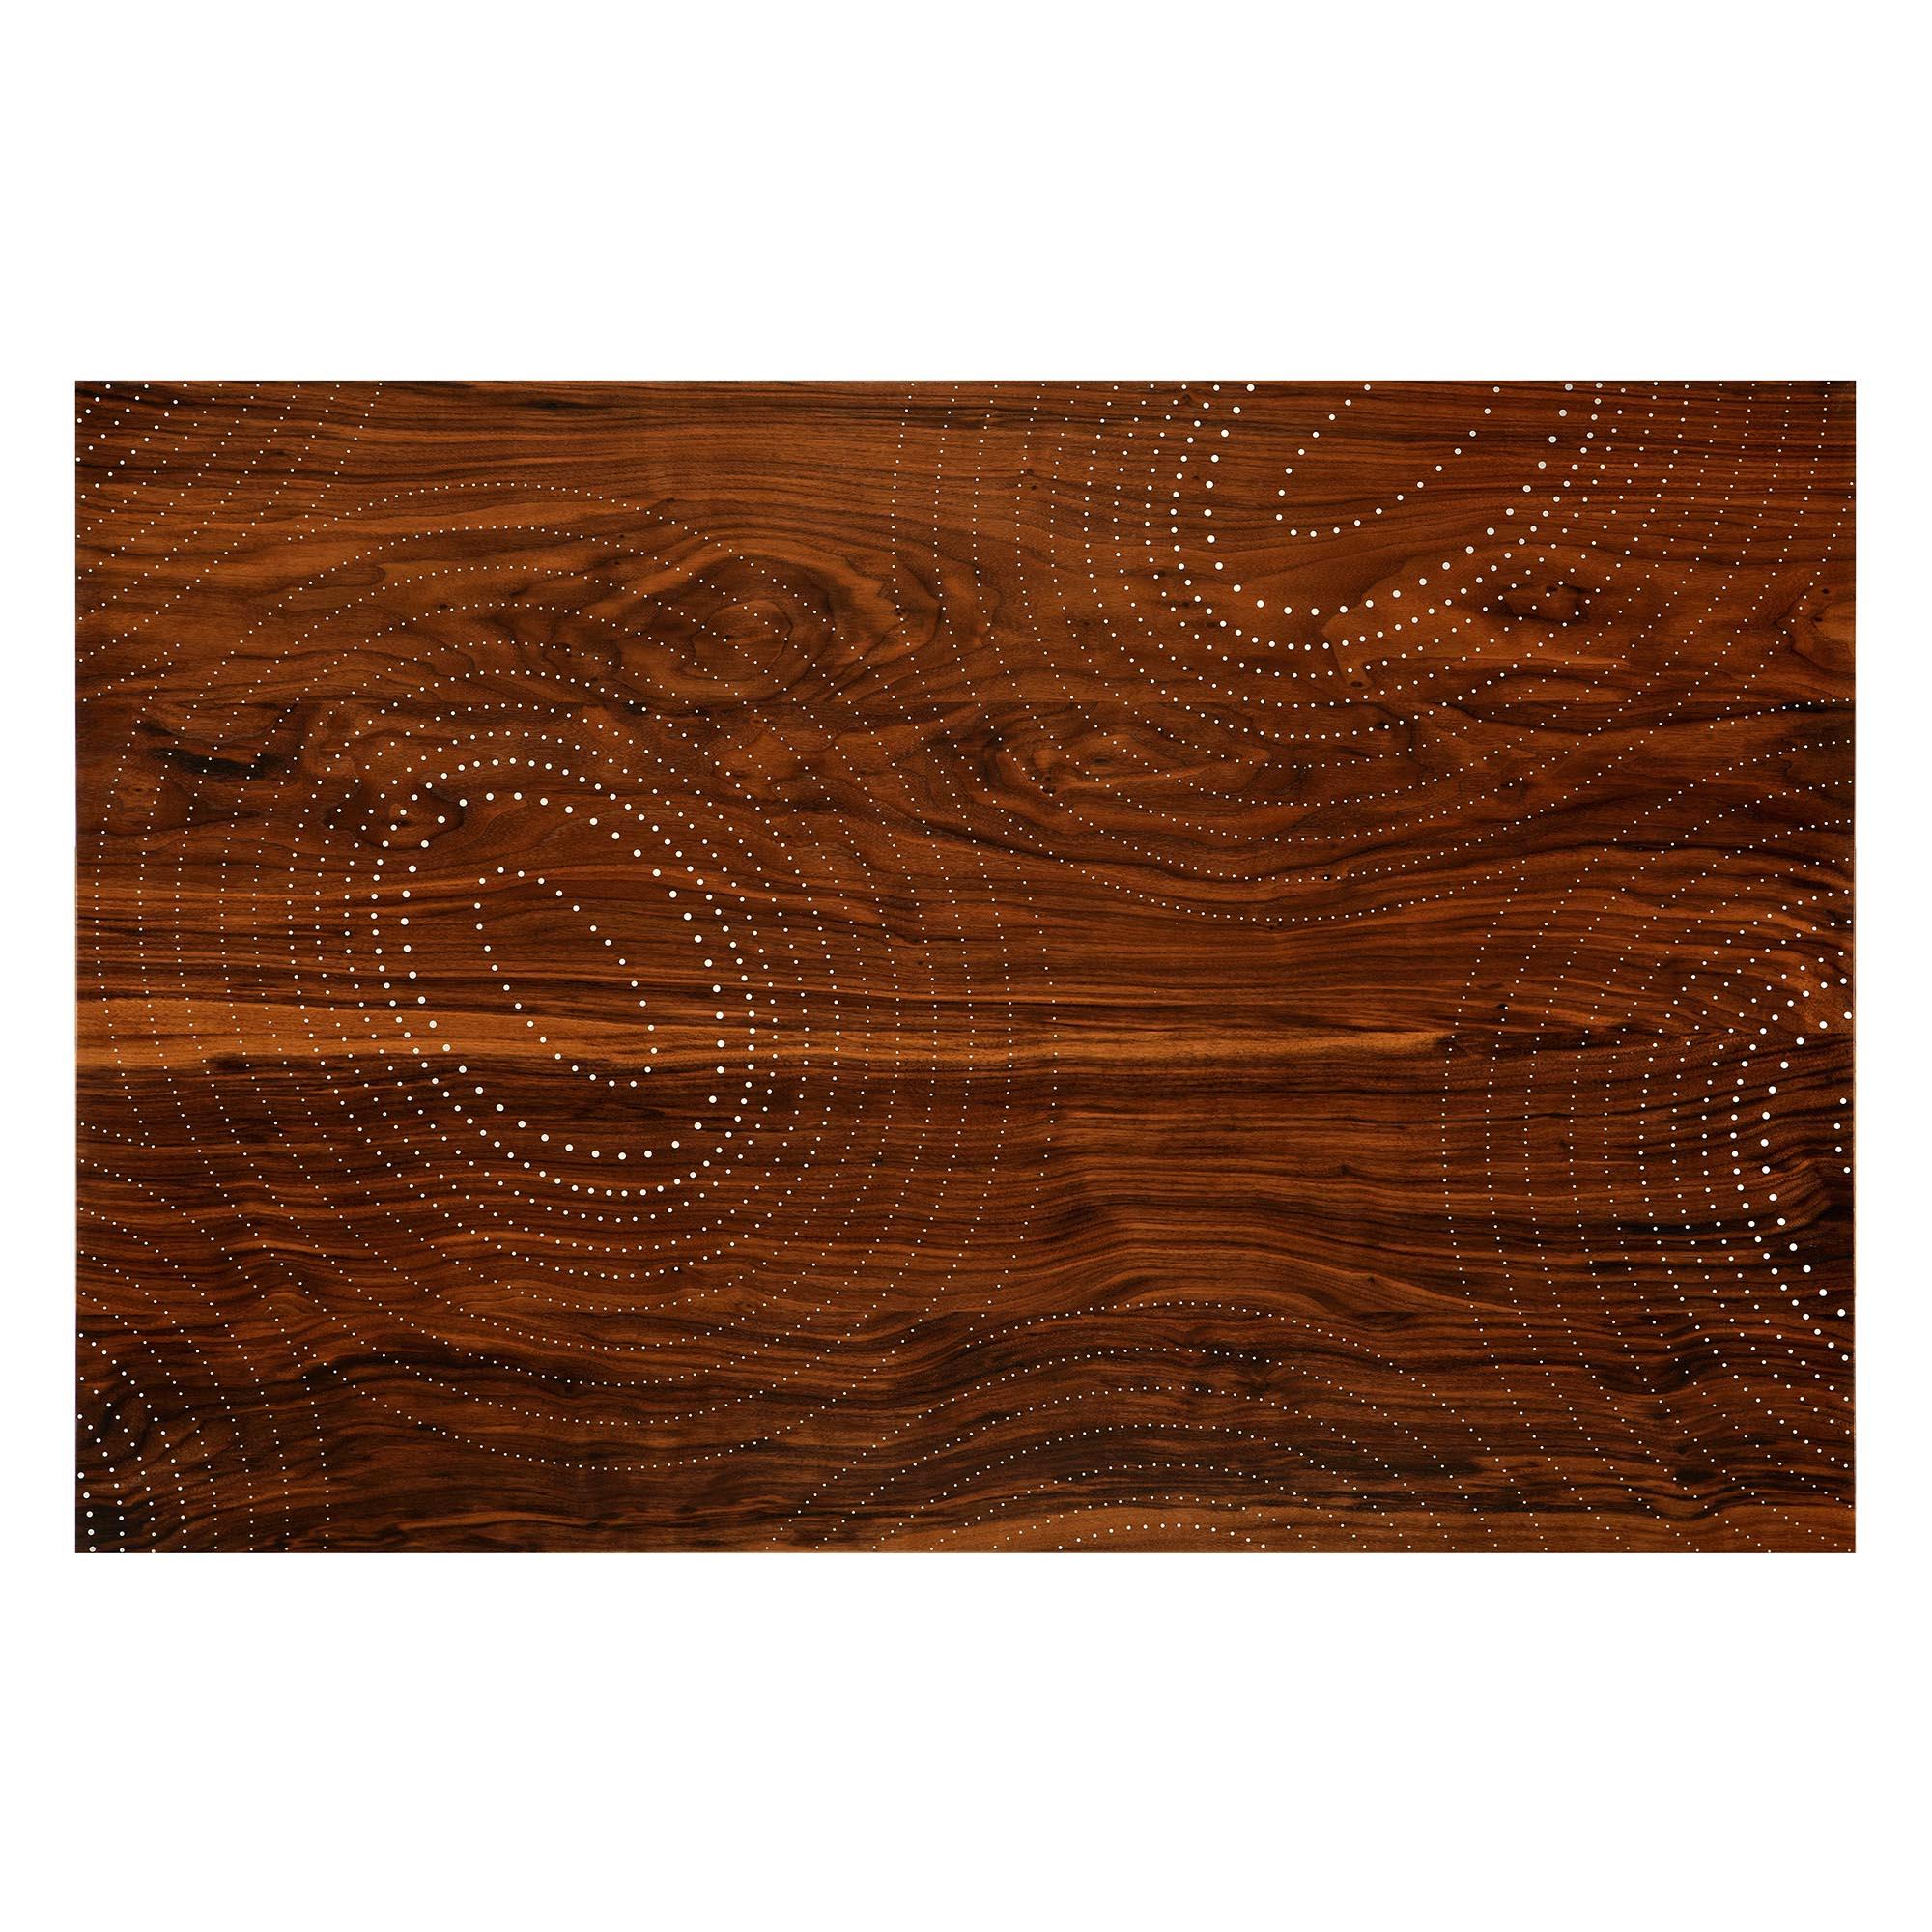 Modern contemporary nail inlay coffee table no. 37 by Peter Sandback. 
Natural walnut, nails
Measures: 32